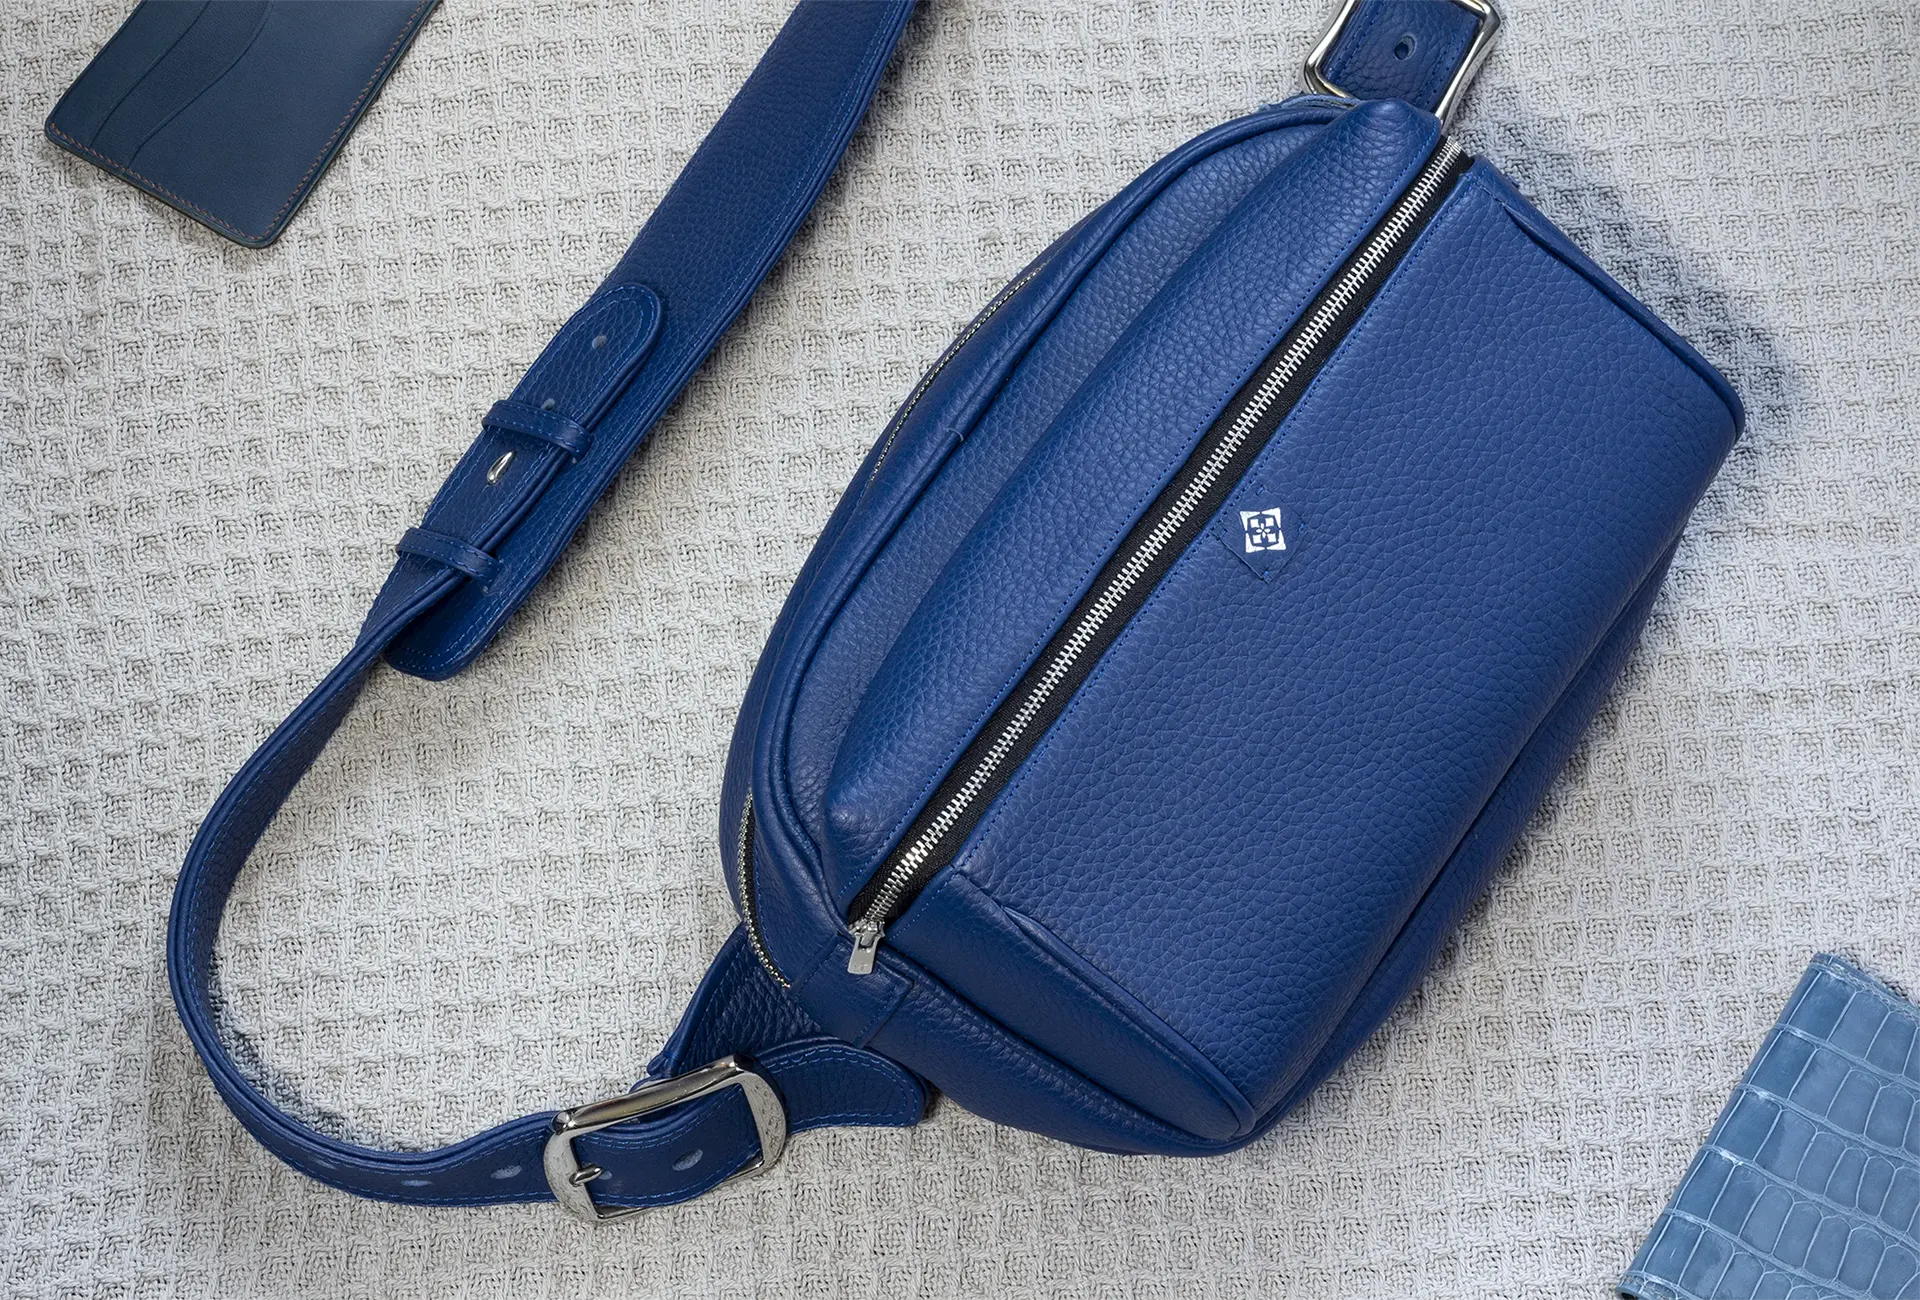 possala designs handmade leather camera sling bag